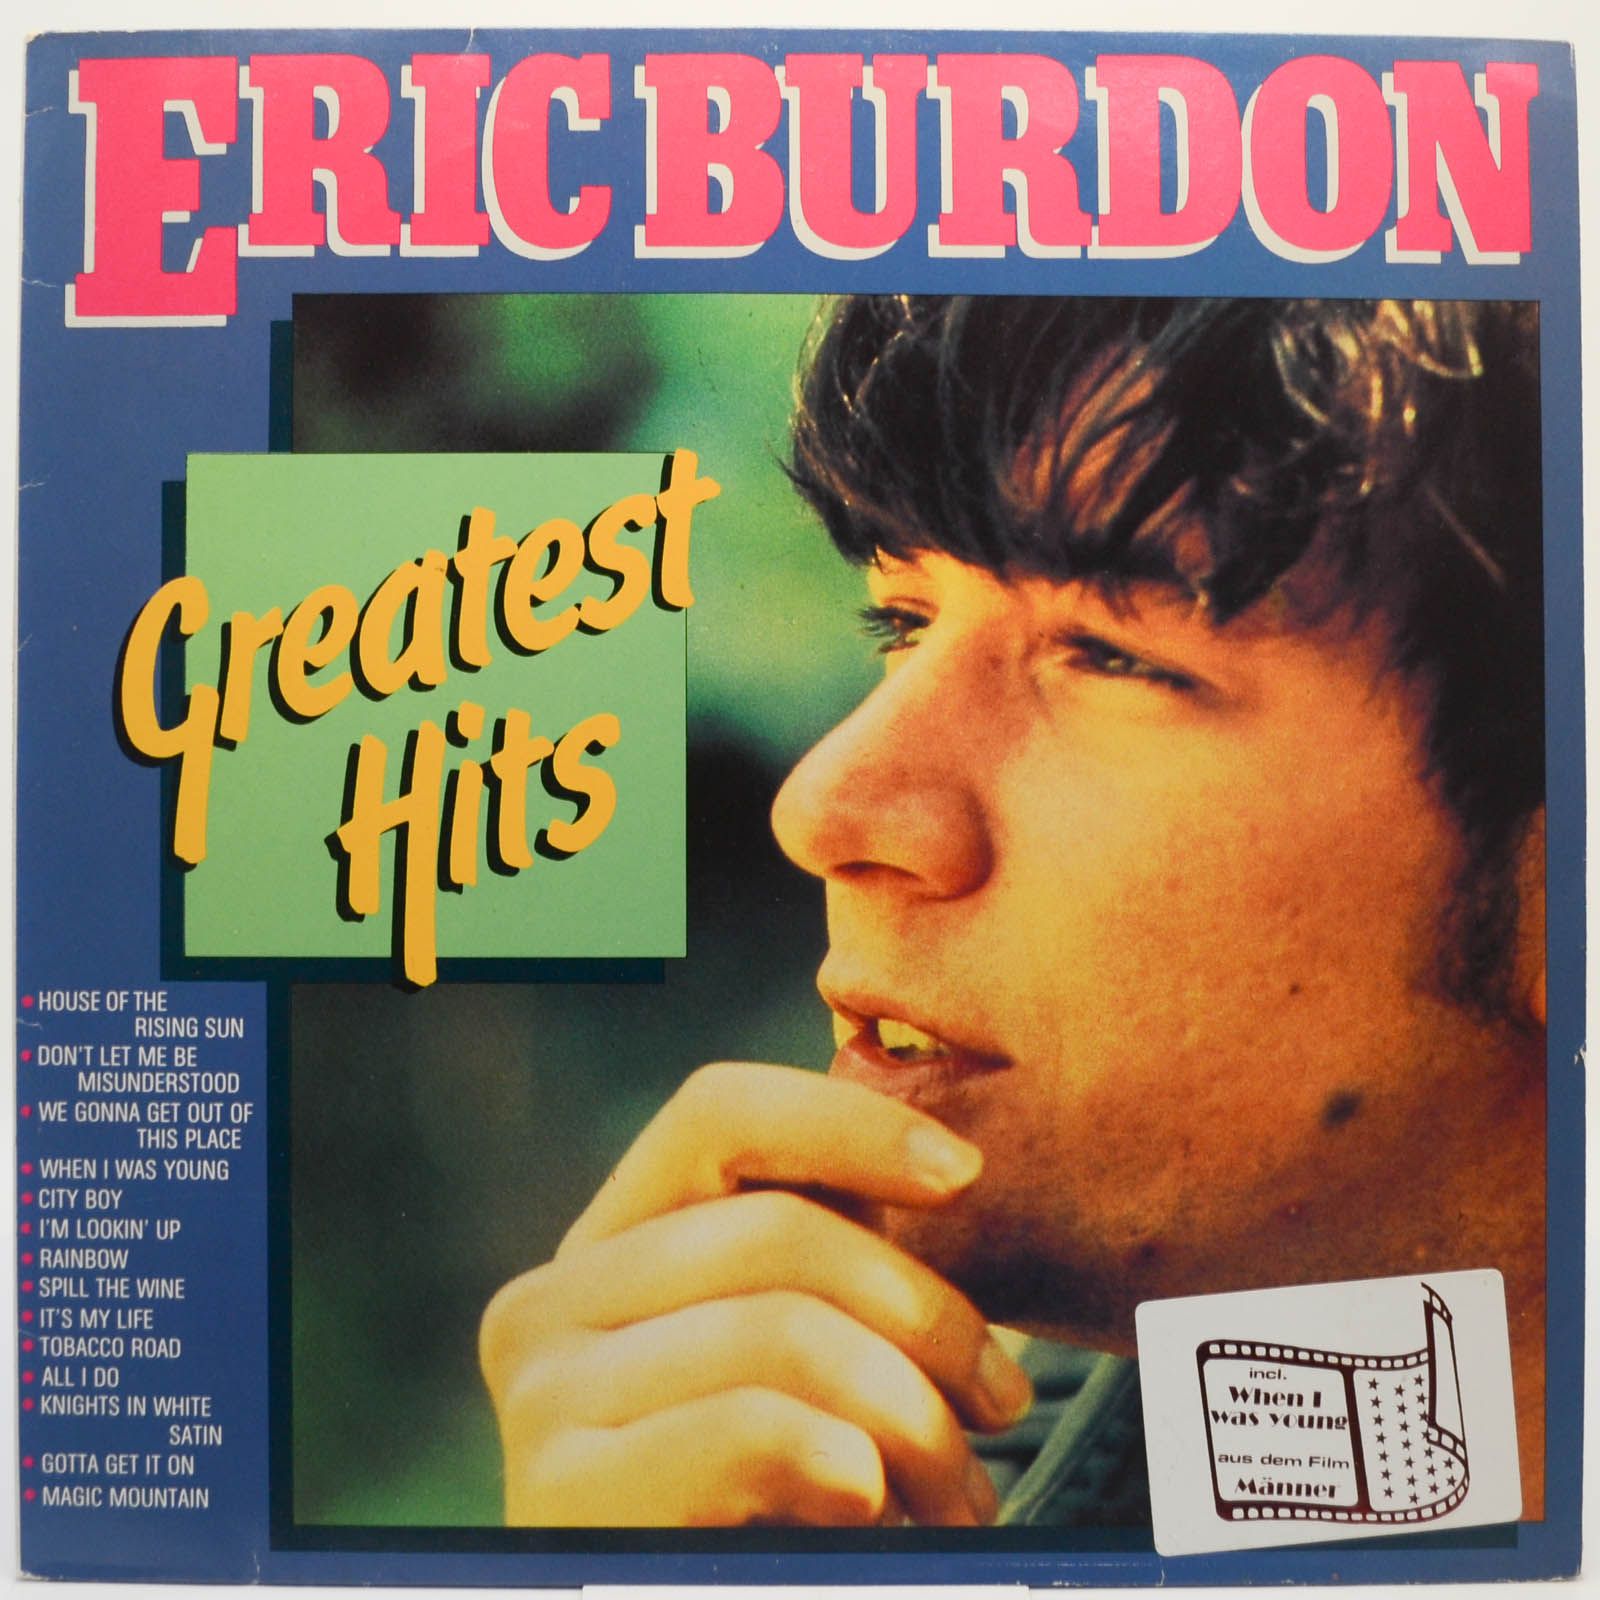 Eric Burdon — Greatest Hits, 1974